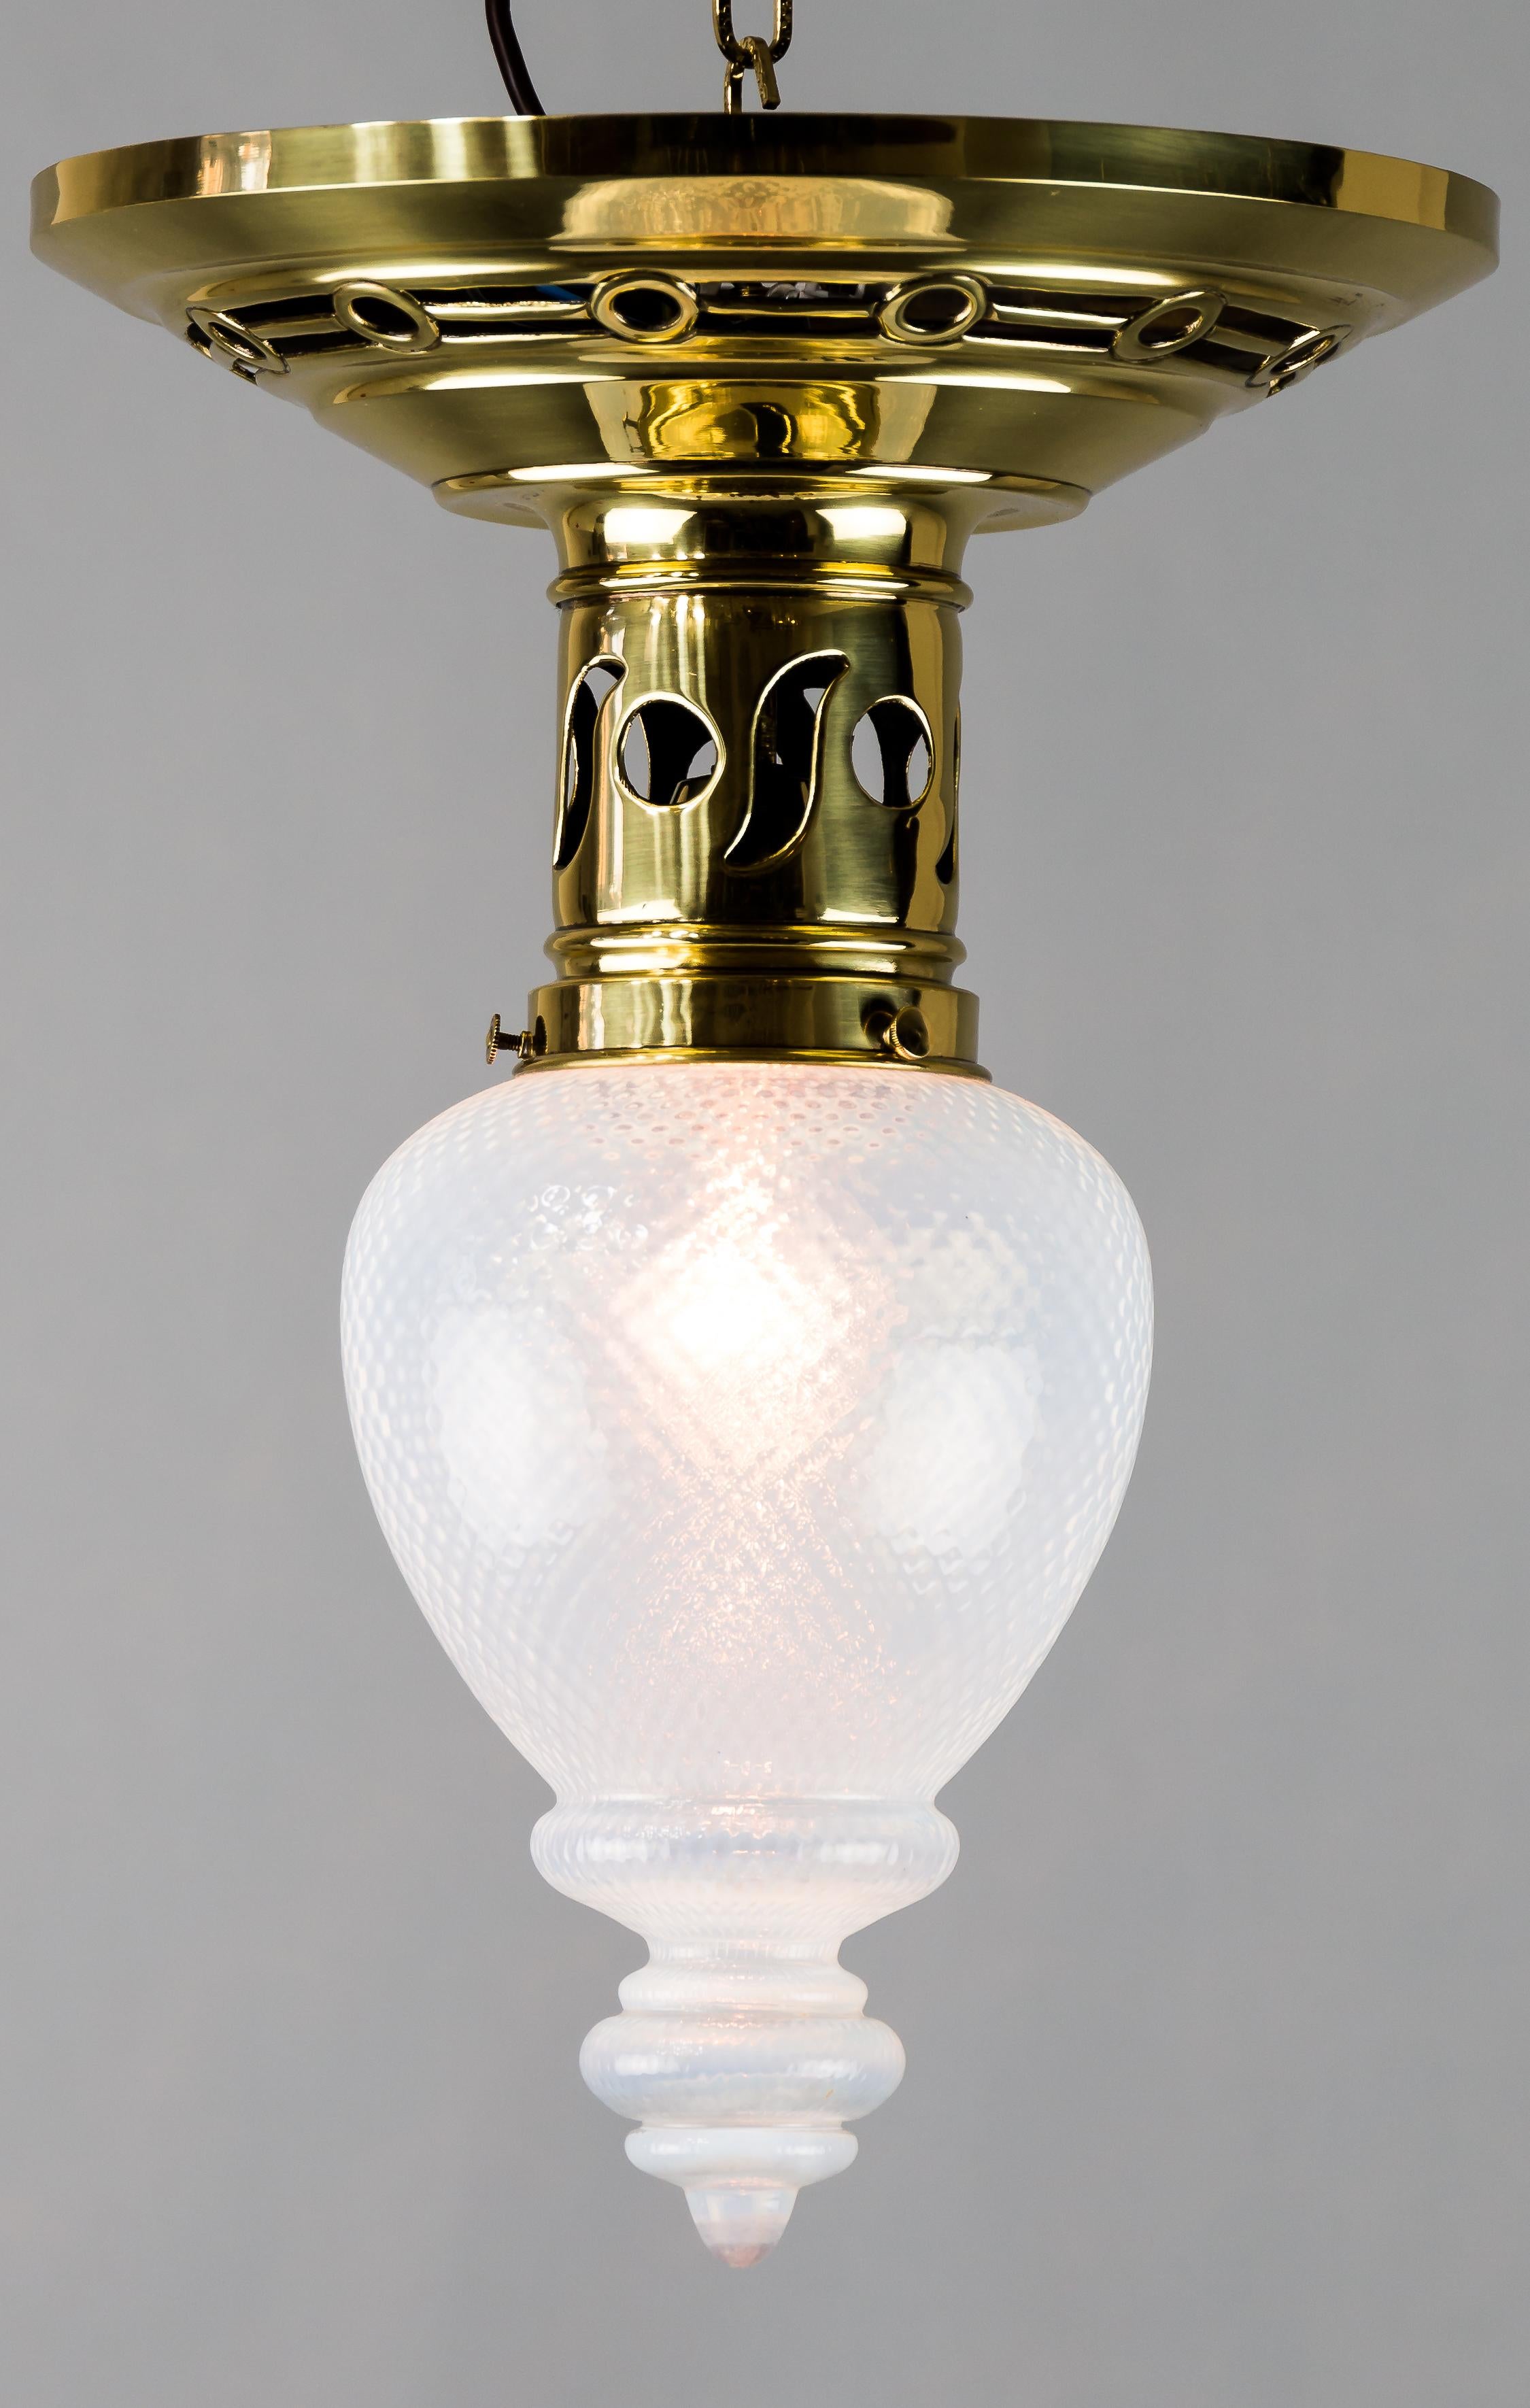 Jugendstil Ceiling Lamp circa 1908 with Original Opaline Glass Shade 3